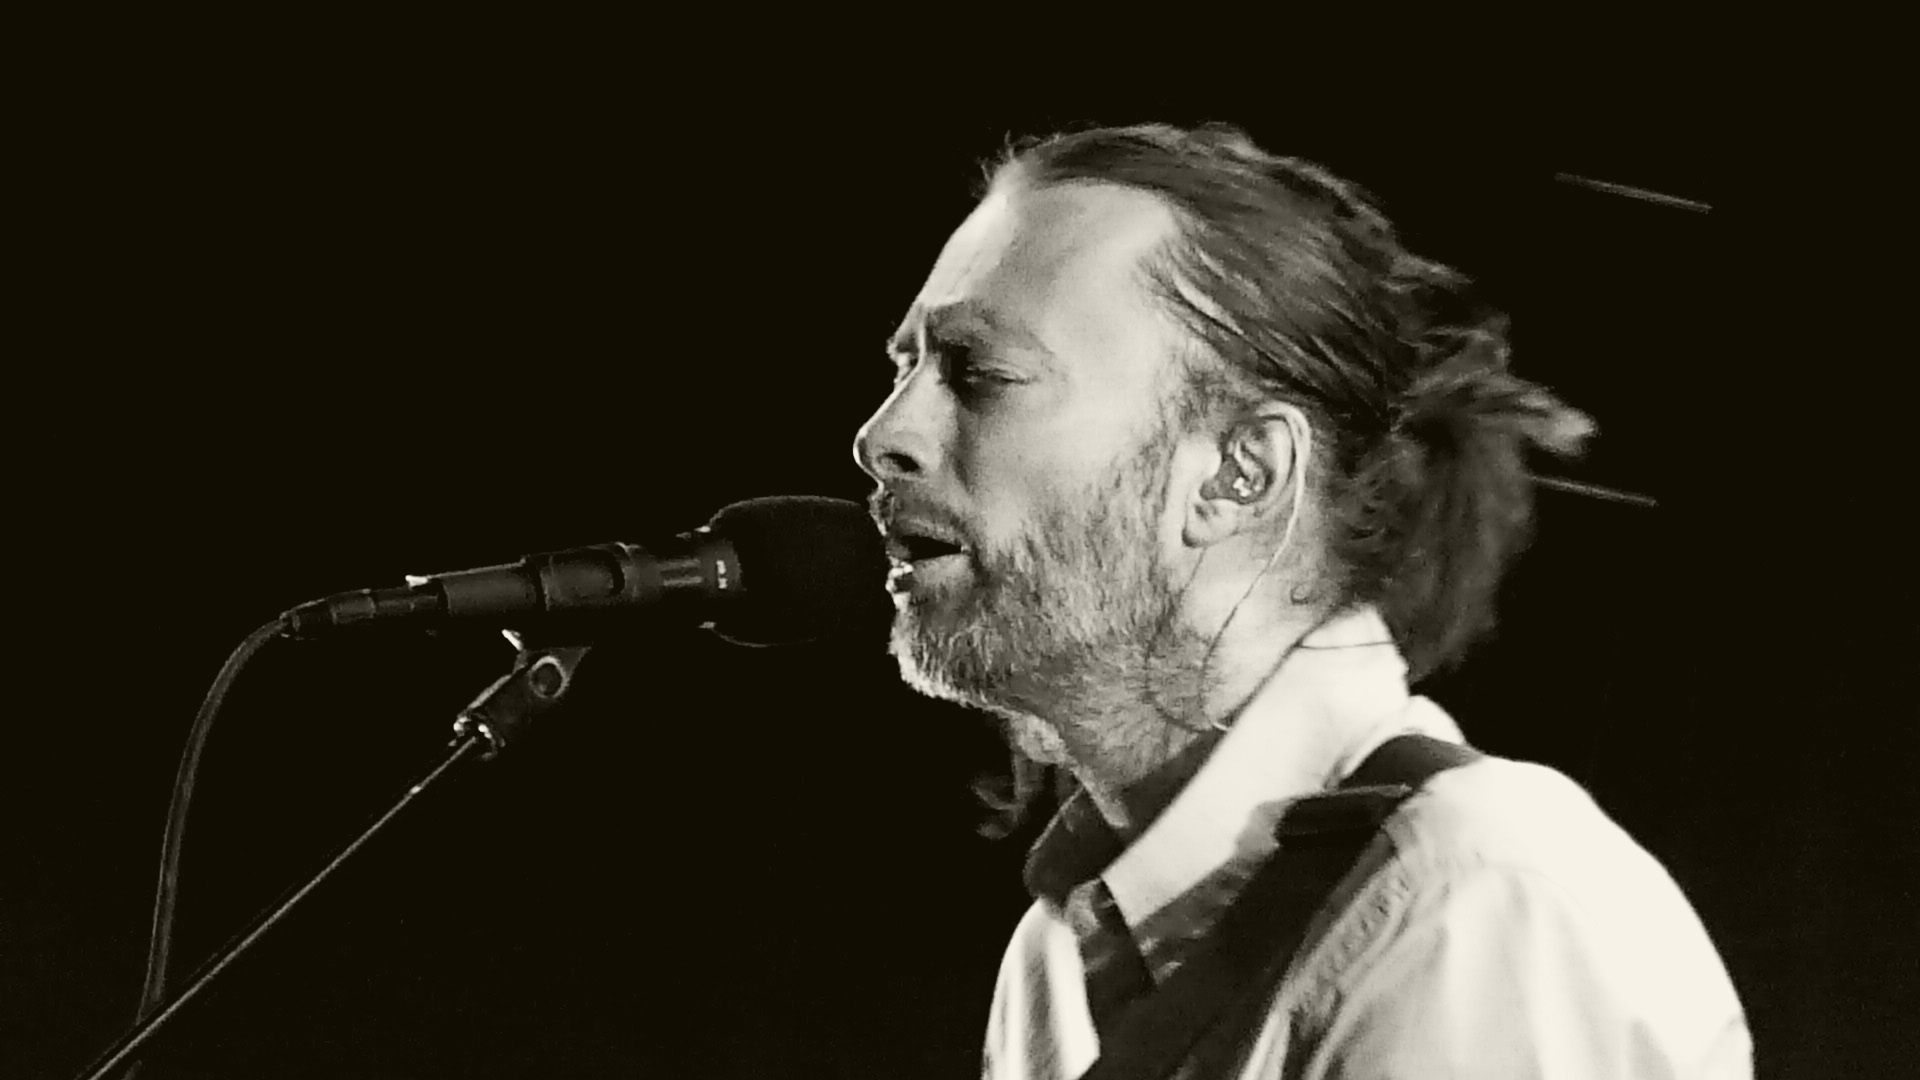 Radiohead lead singer Thom Yorke